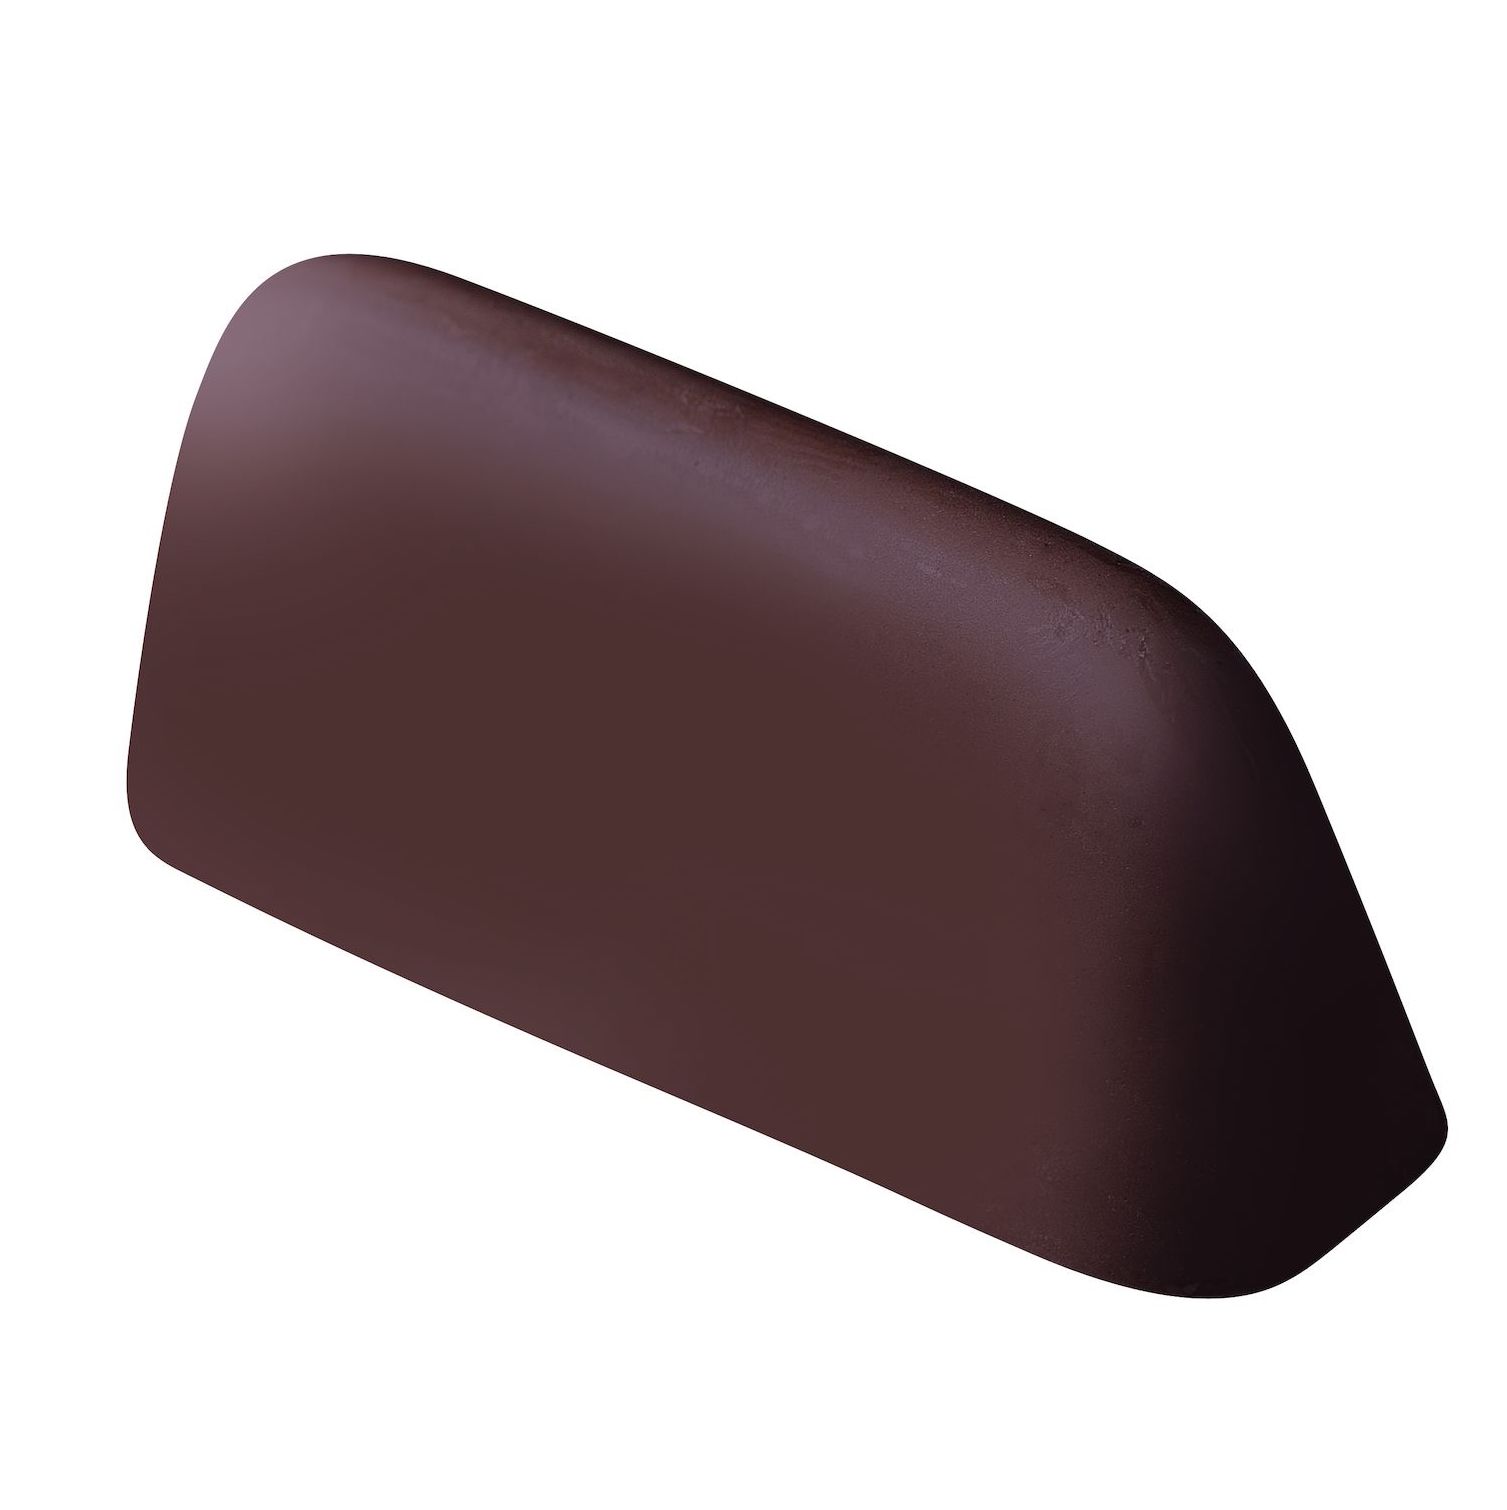 Форма для шоколада «Капсула» поликарбонатная MA1640, Martellato, Италия  | Фото — Магазин Andy Chef  1